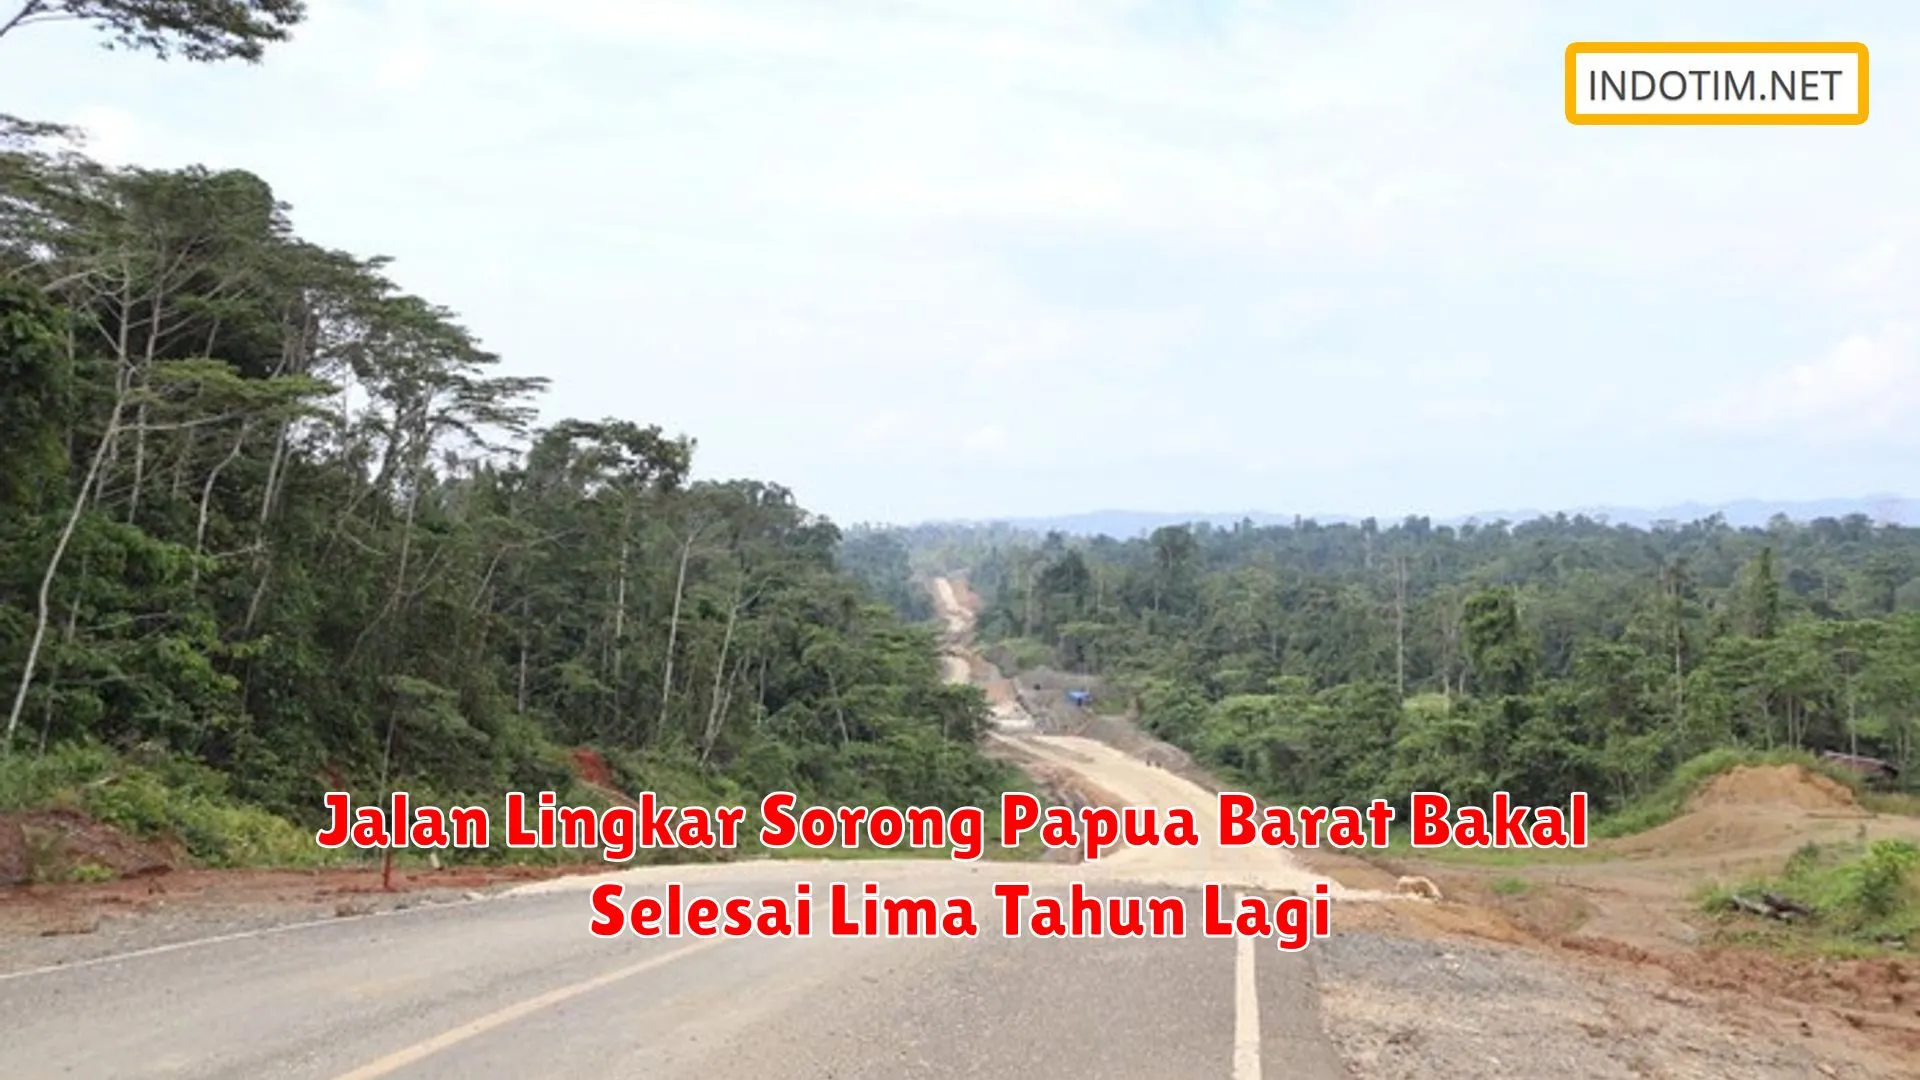 Jalan Lingkar Sorong Papua Barat Bakal Selesai Lima Tahun Lagi